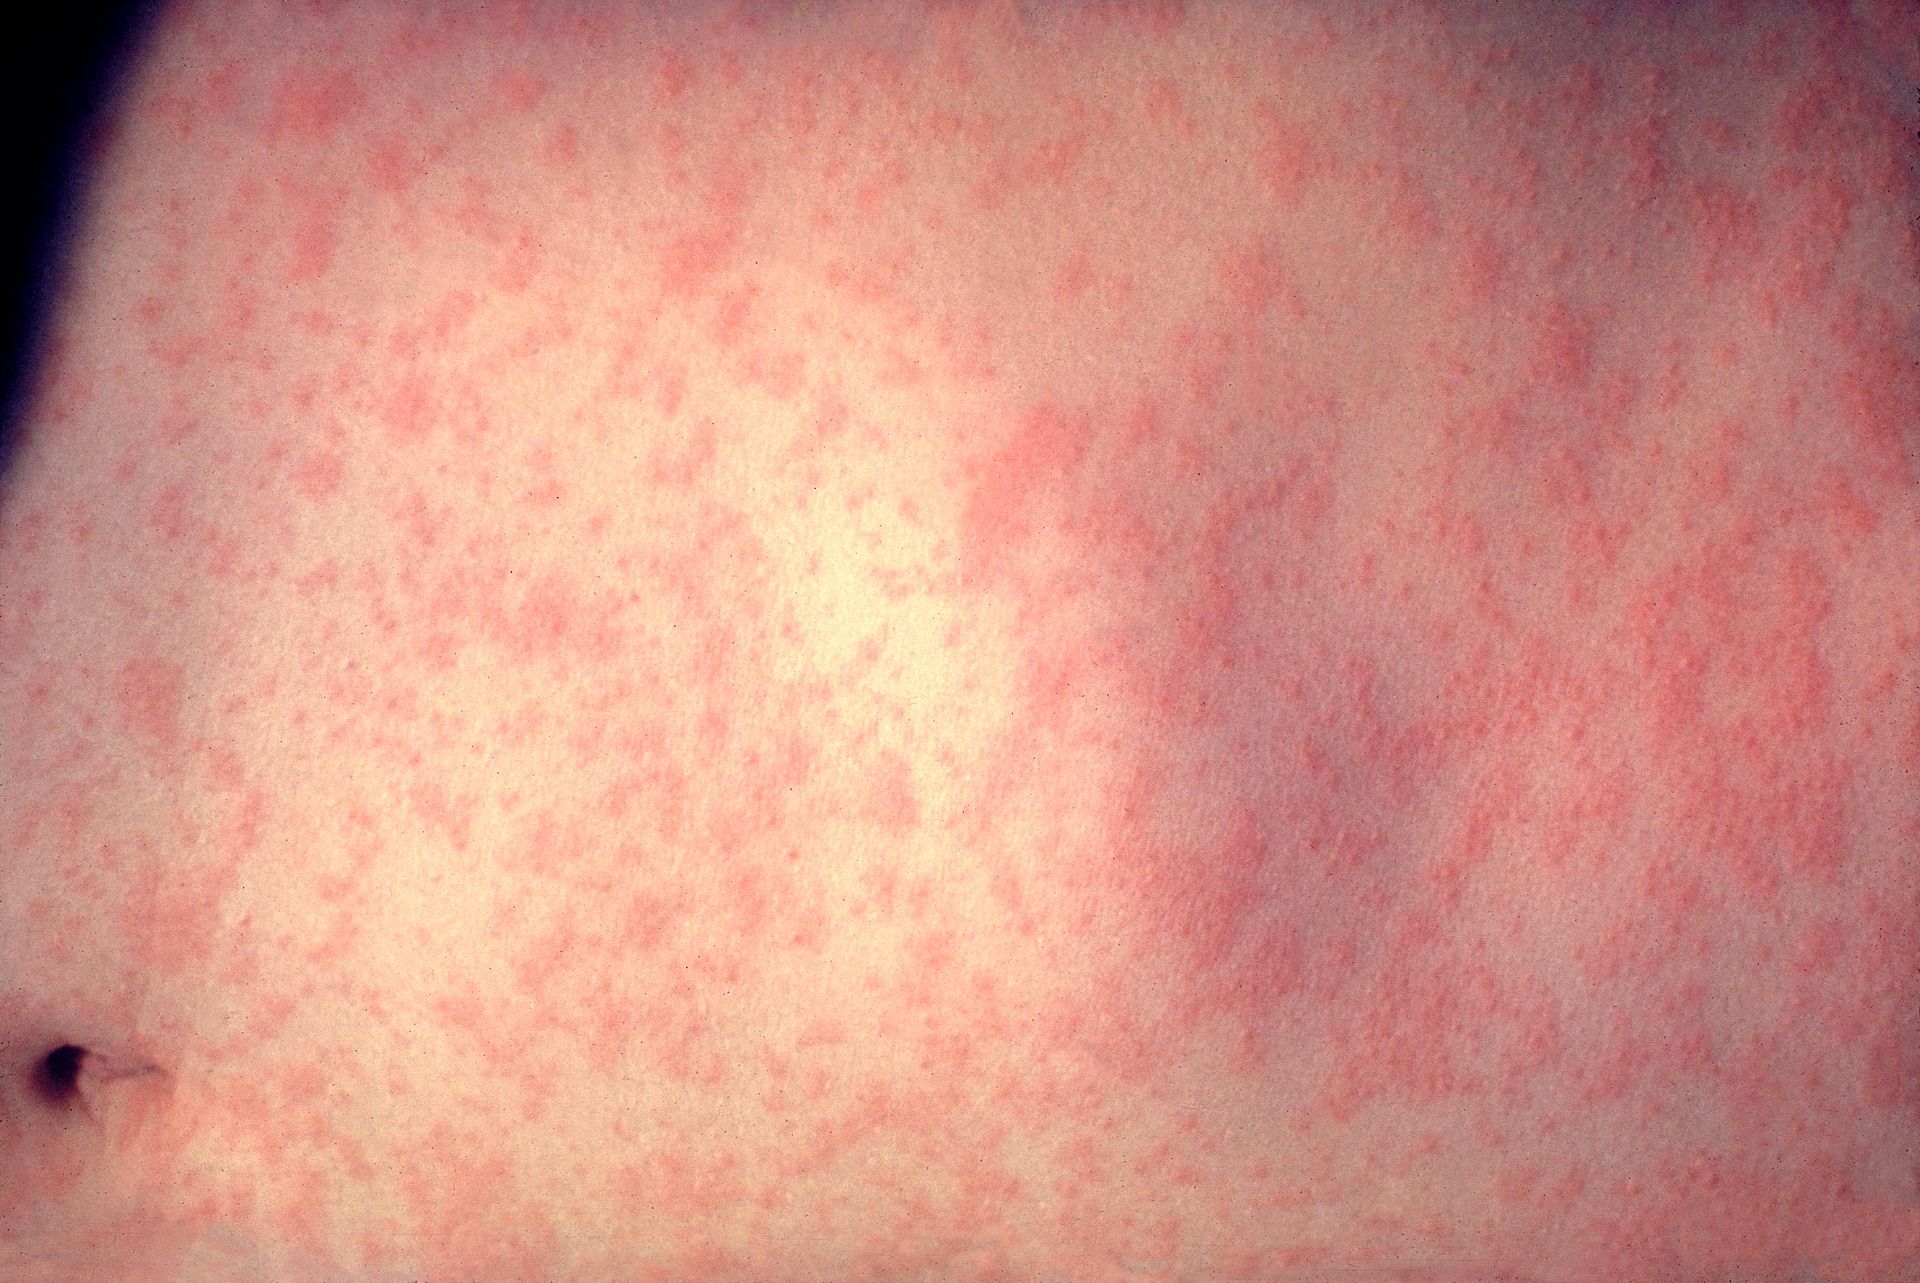 Skin with measles. PHOTO: CDC/Dr. Heinz F. Eichenwald via Wikipedia